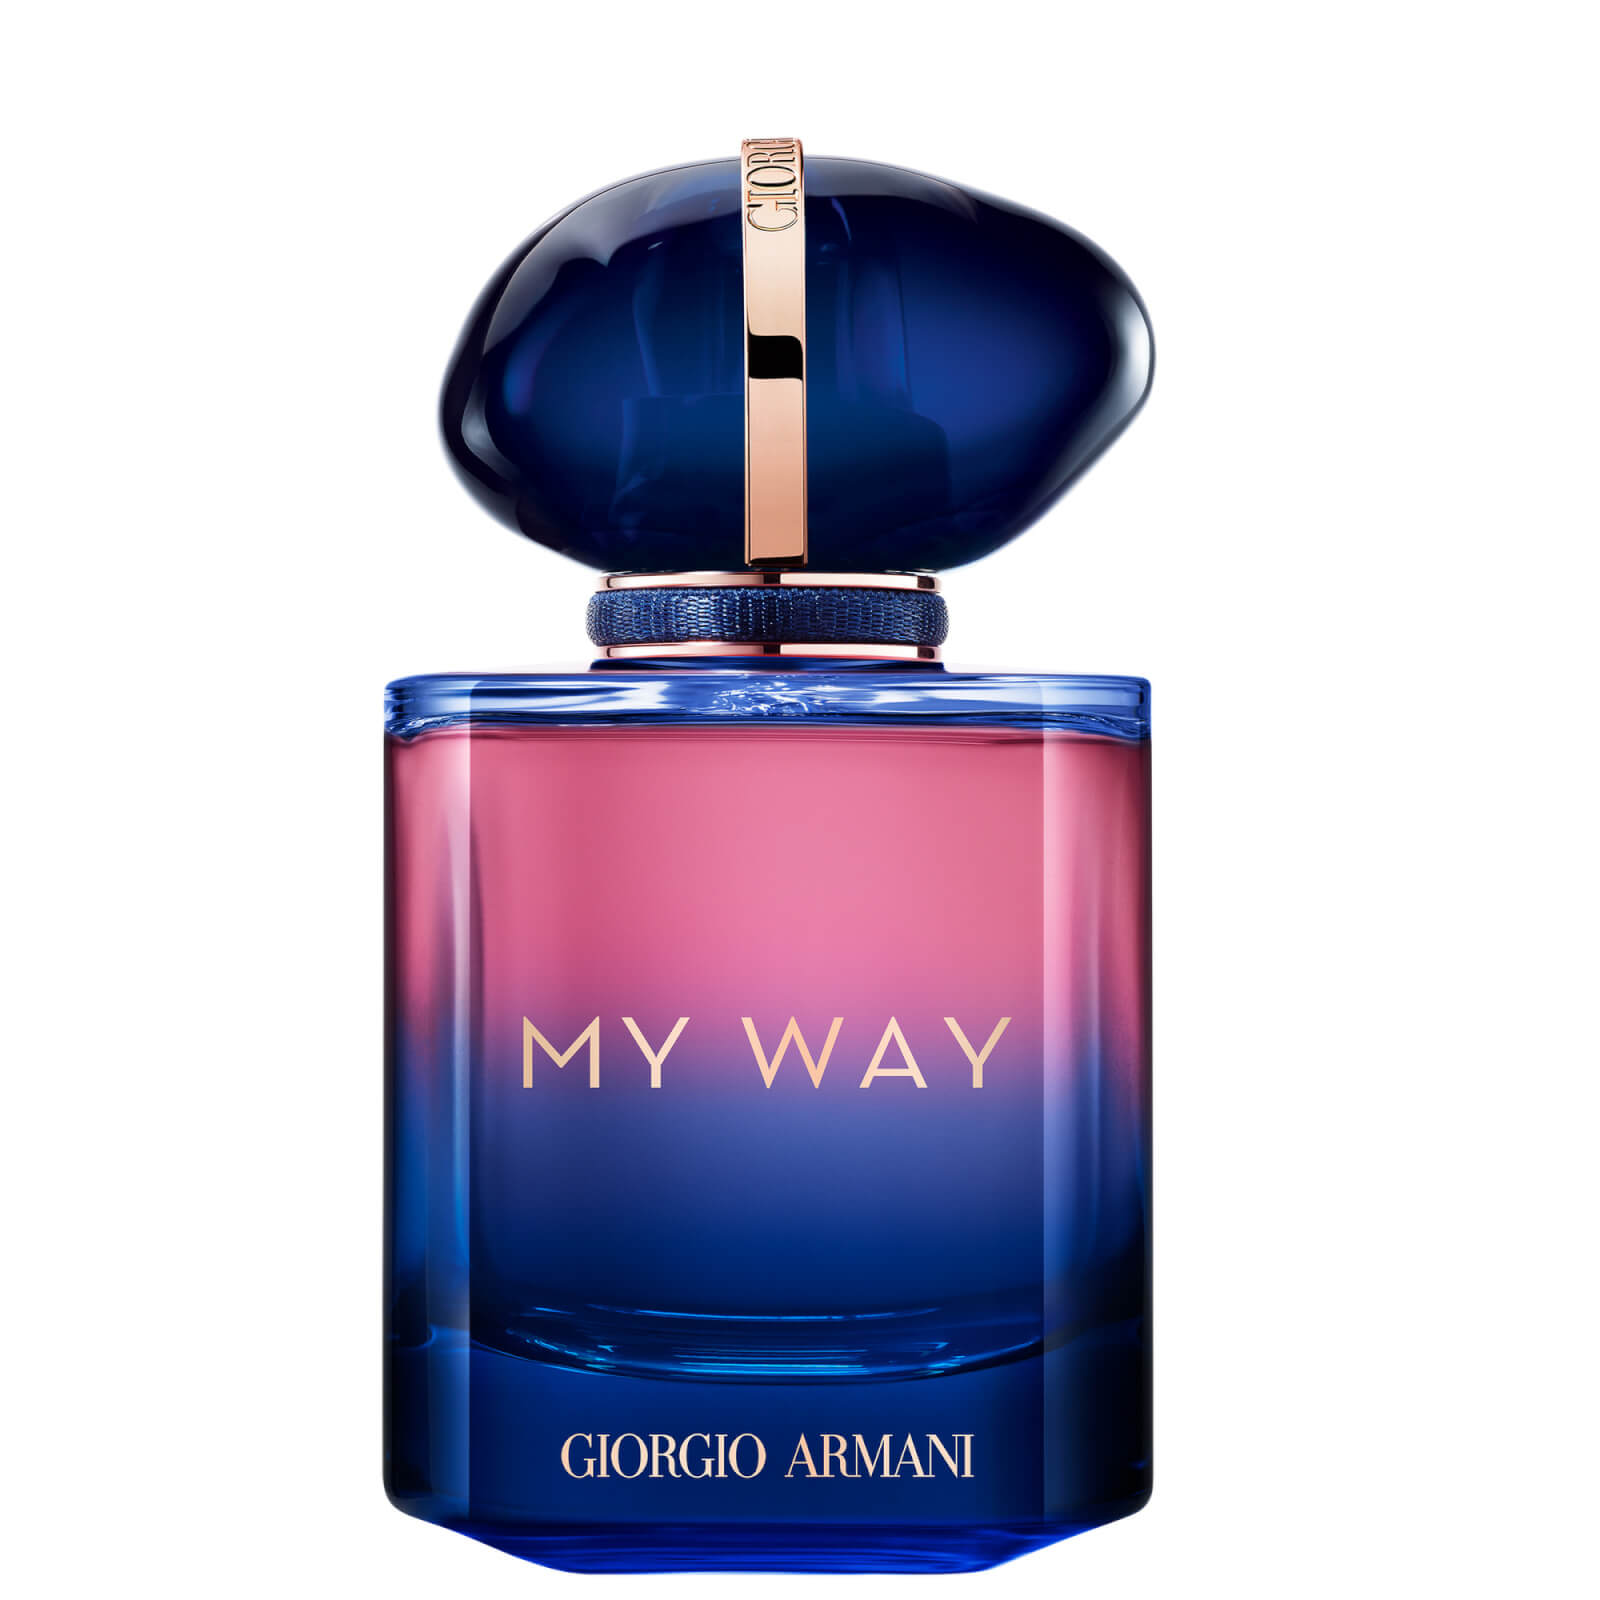 Giorgio Armani My Way Parfum 50ml product